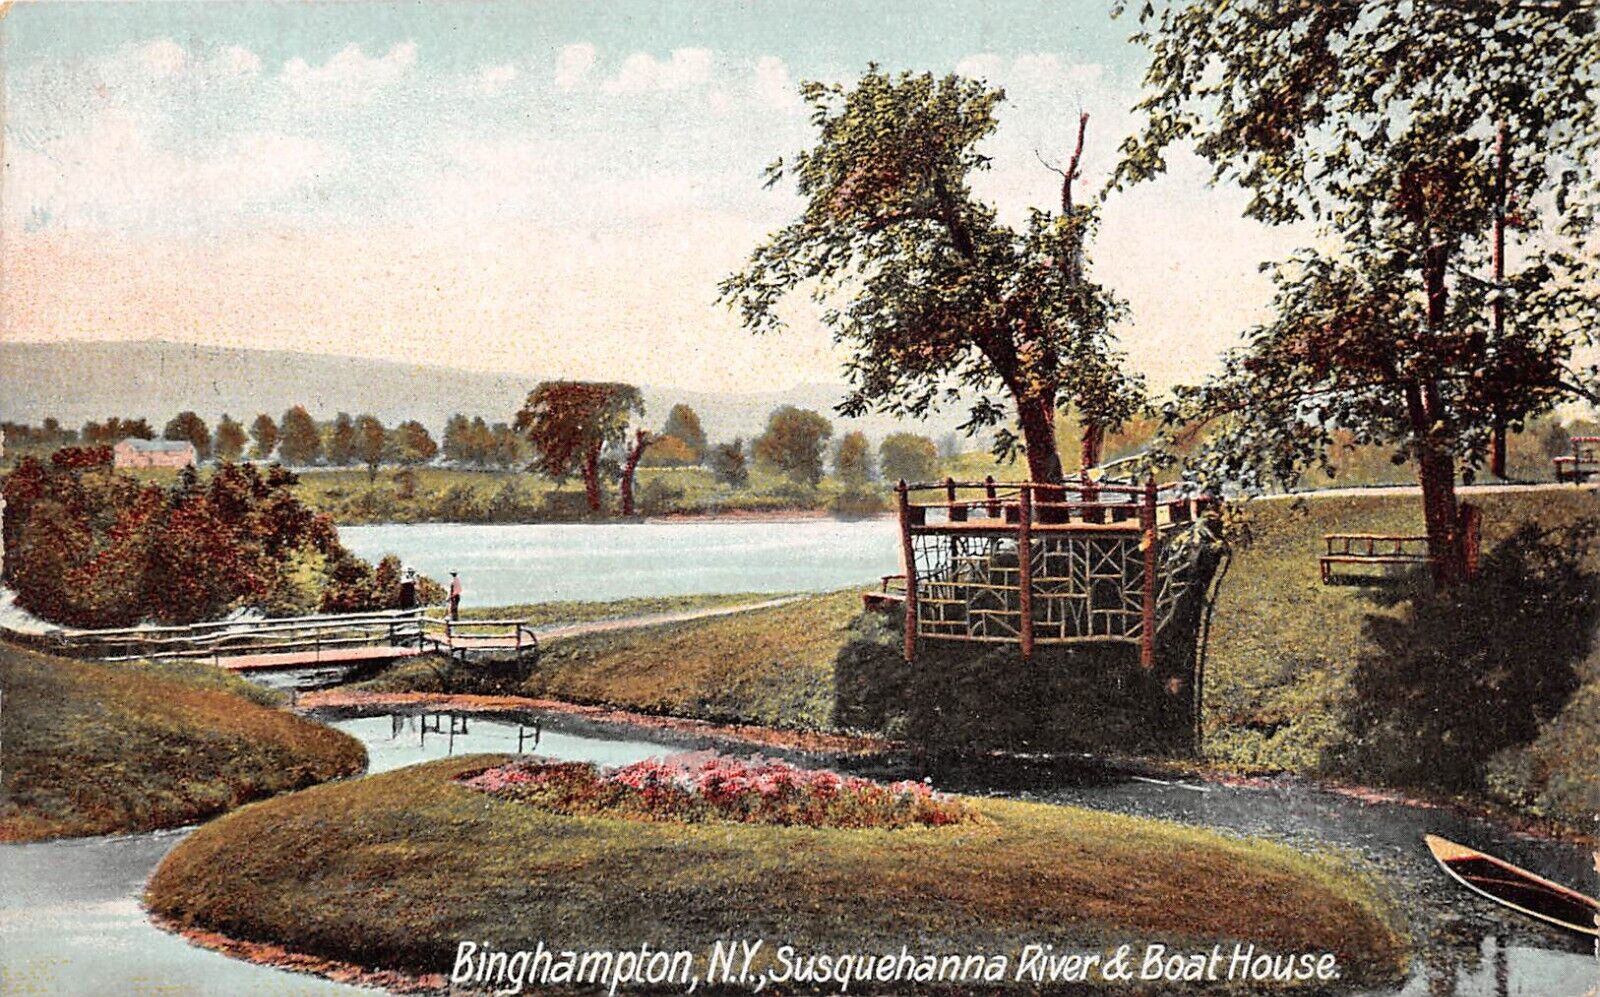 Binghampton NY New York Susquehanna River & Boat House c1907 Postcard 4300